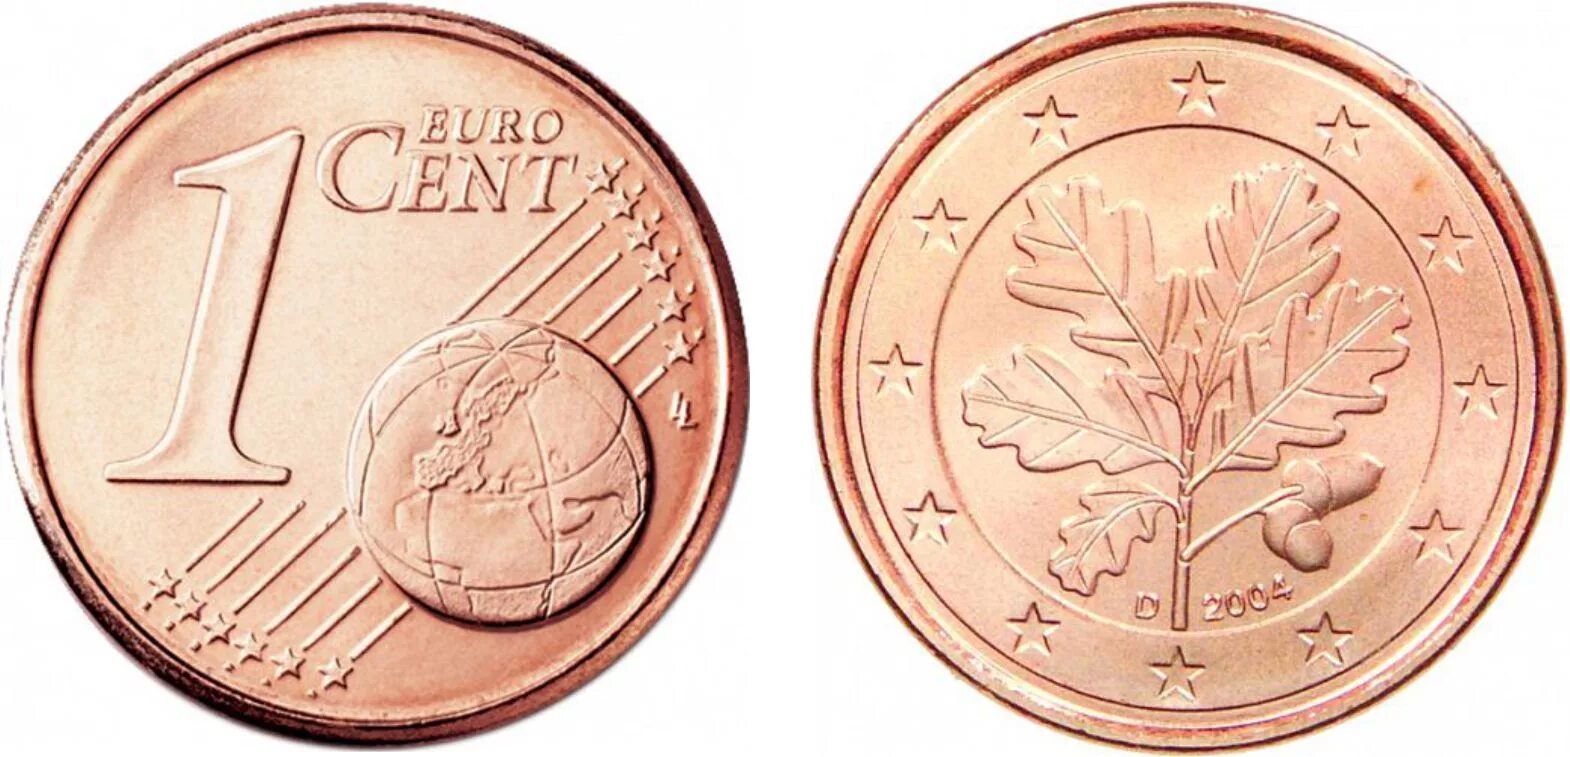 Евро цент монета 2007. 2 Евро цента монета. Монета 2007 5 Euro Cent. 1 Euro Cent 2004 a Германия.